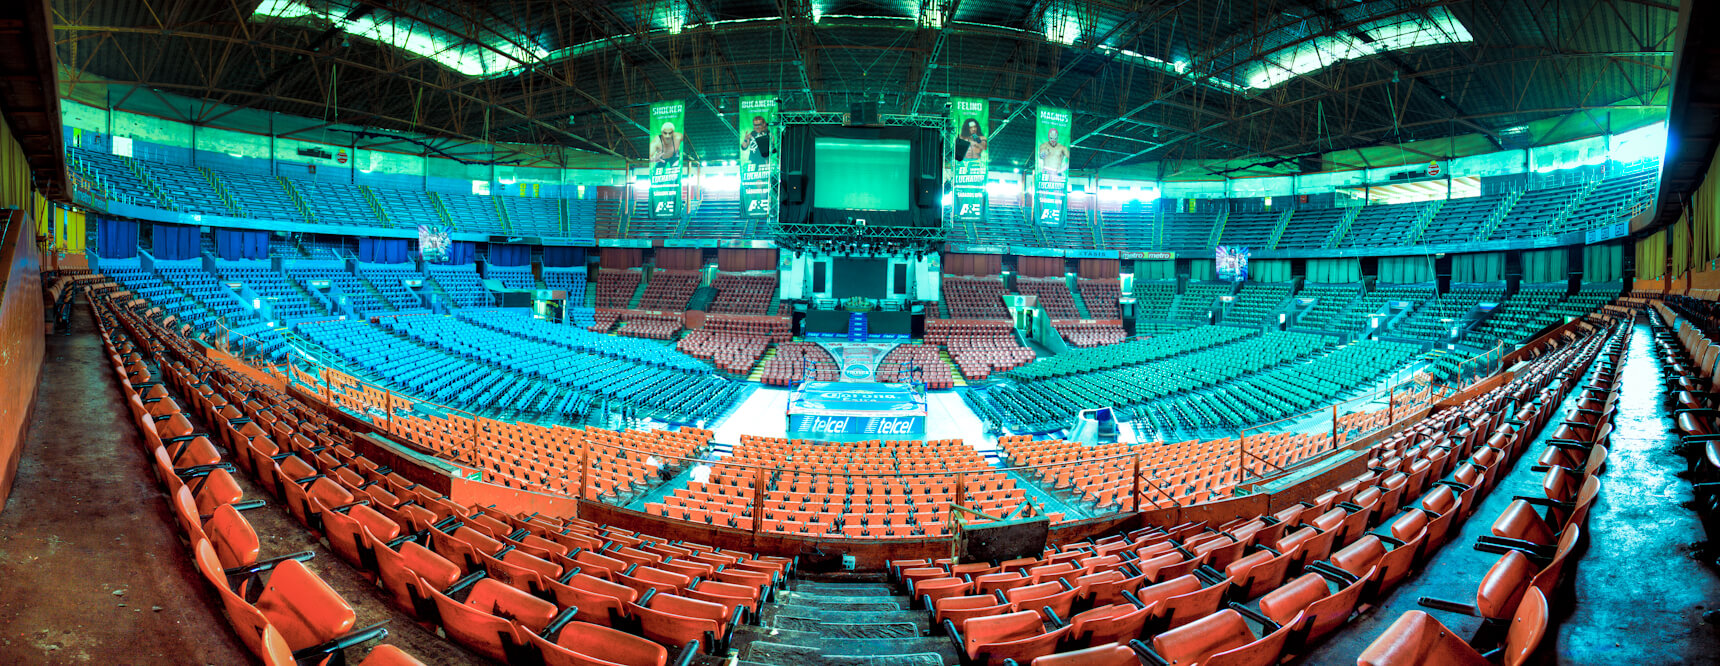 Arena Mexico: Mexico City